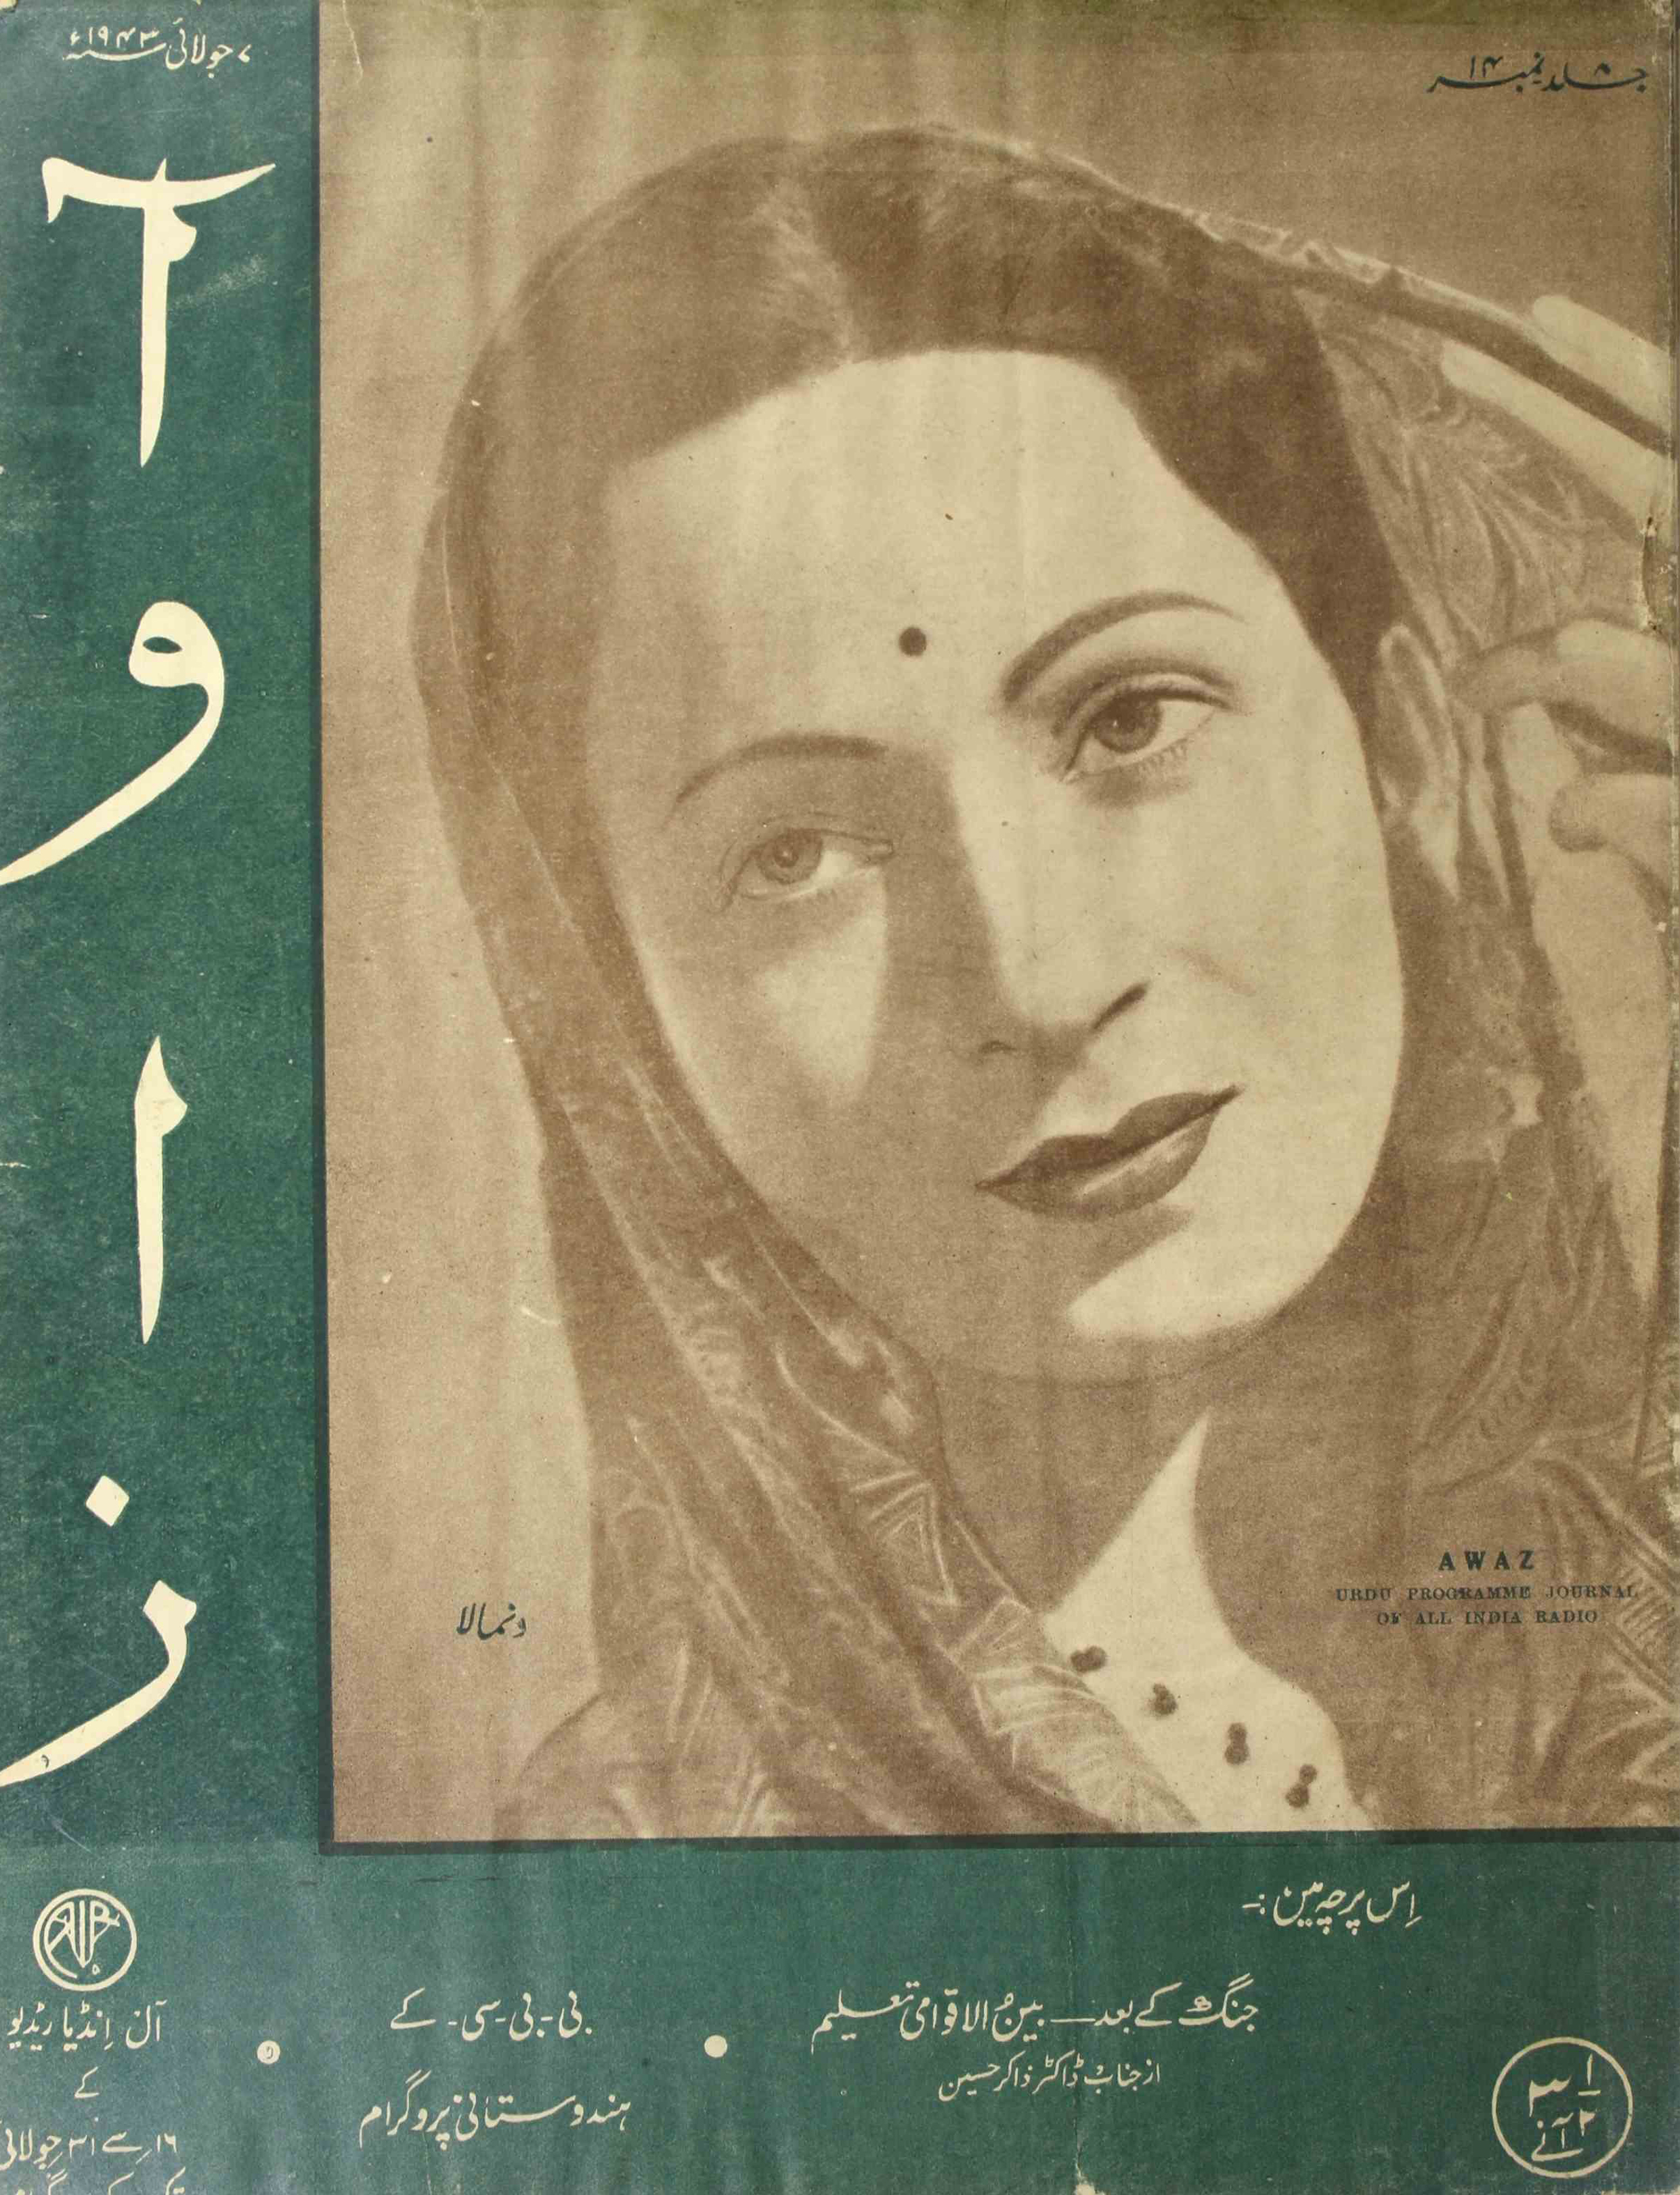 Awaz Jild 8 No 14 July 1943